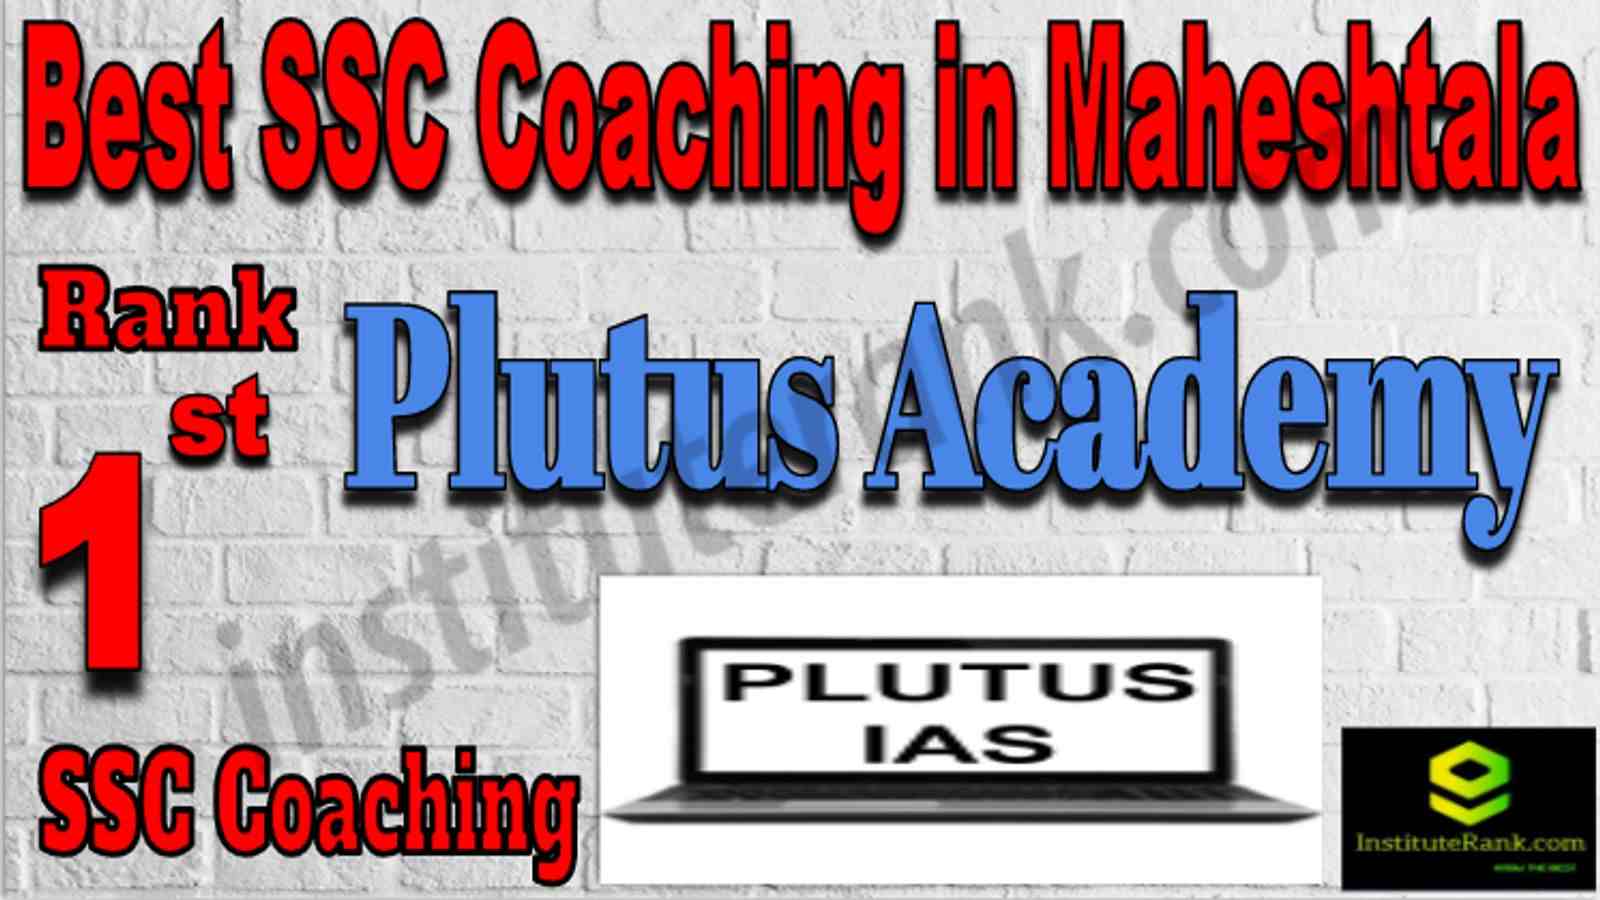 Rank 1 Best SSC Coaching in Maheshtala